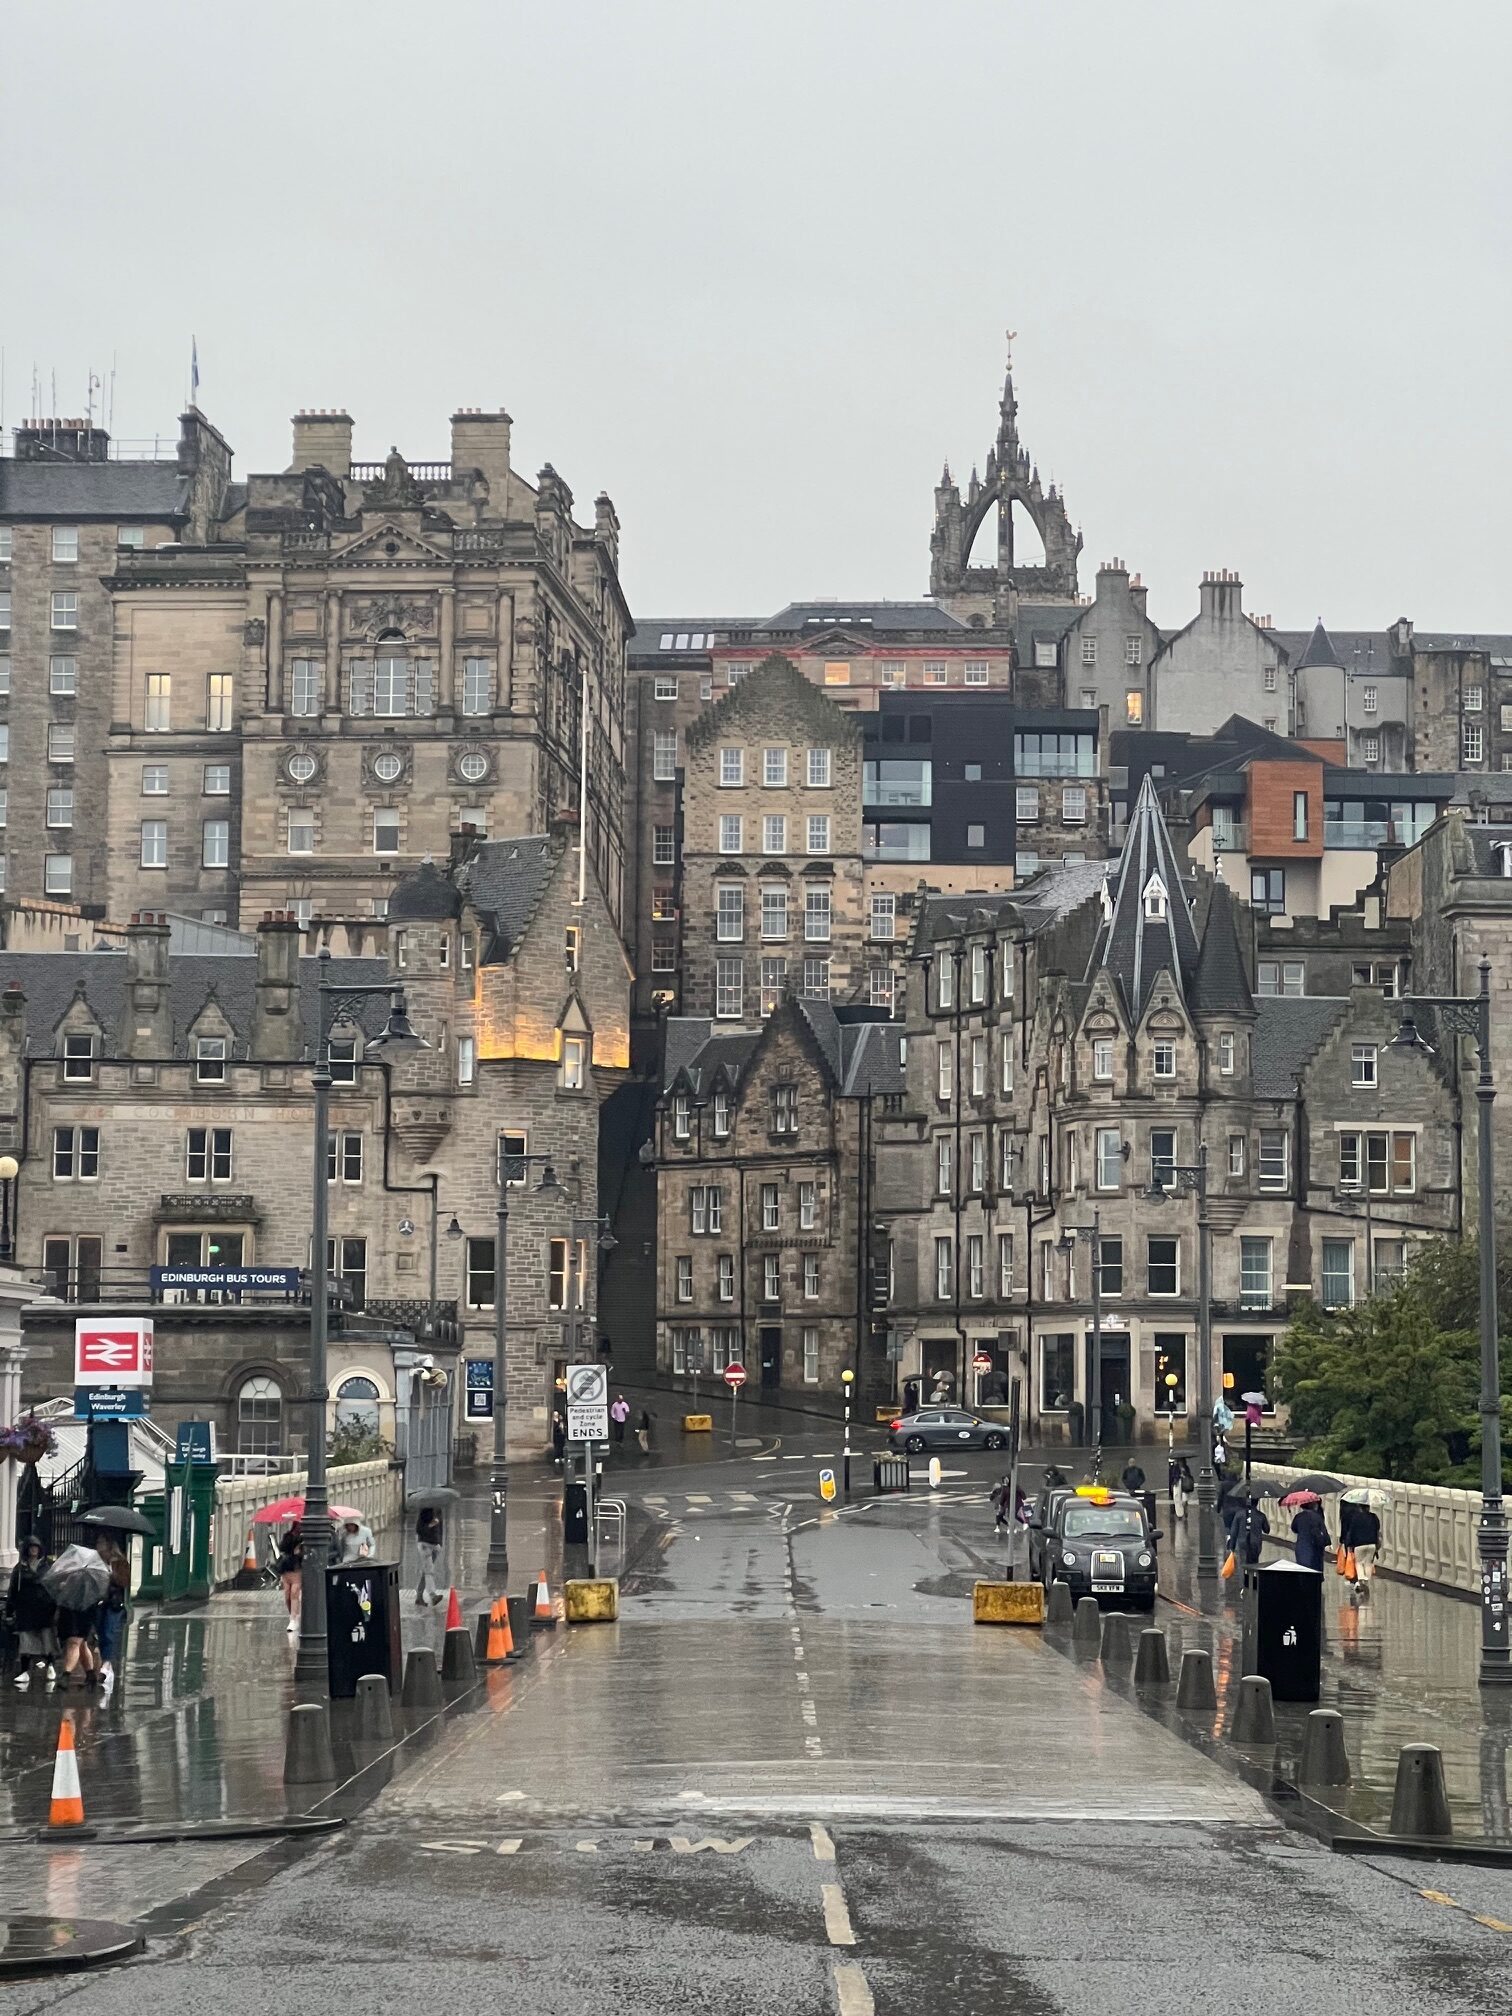 the stacked buildings on Edinburgh's Waverly bridge with rain on the street